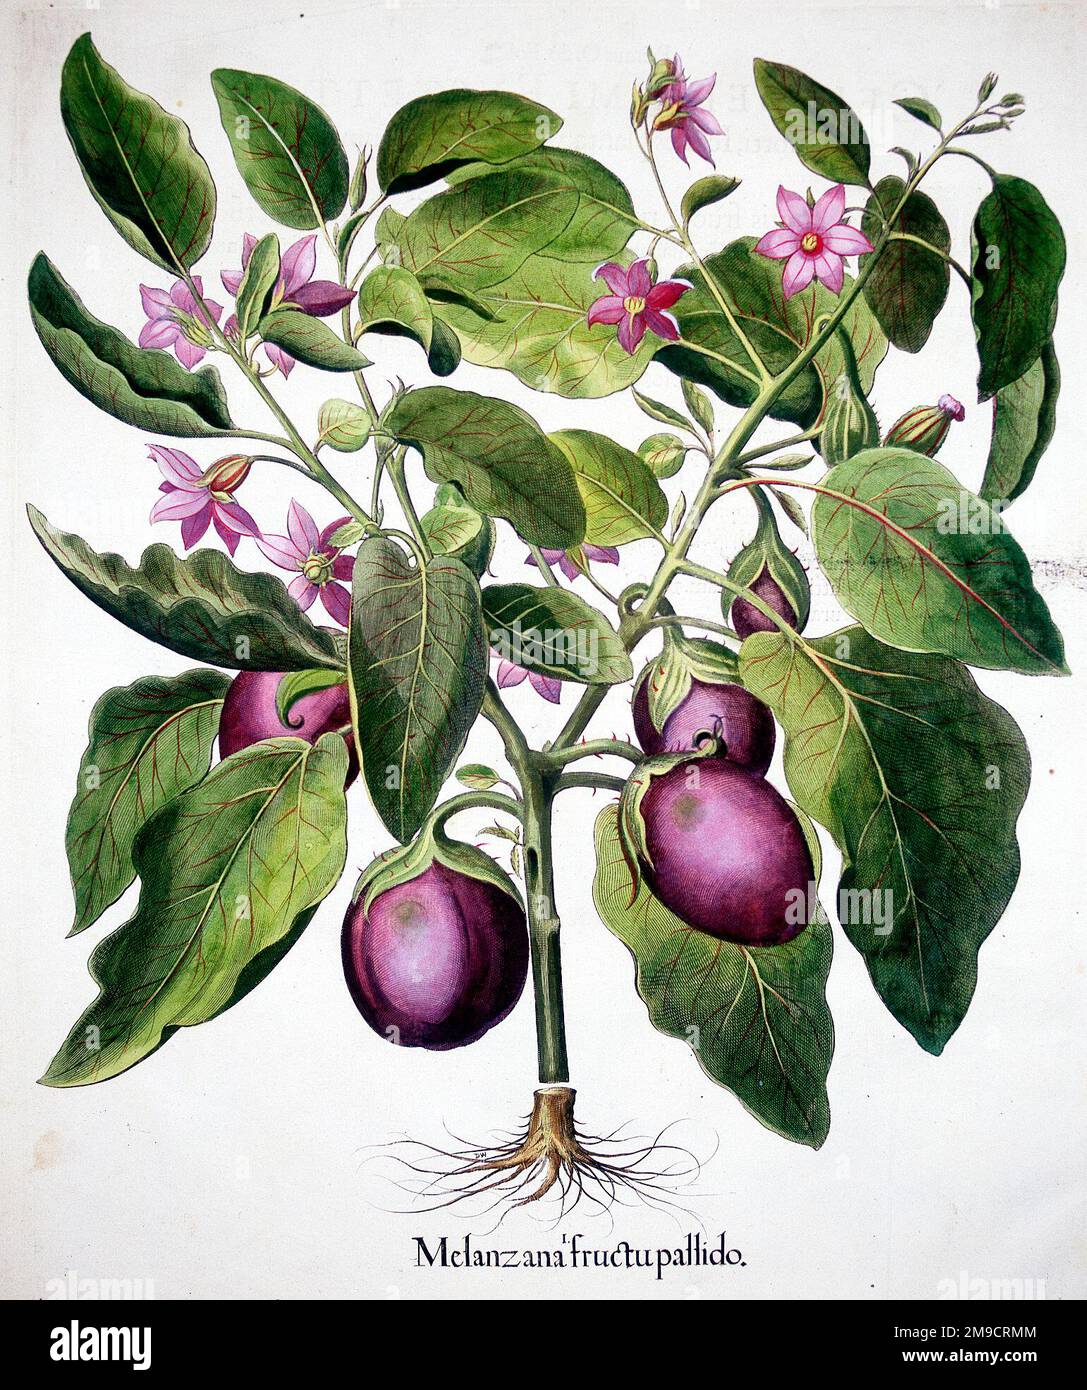 https://c8.alamy.com/comp/2M9CRMM/hortus-eystettensis-melanzana-fructu-pallido-aubergine-2M9CRMM.jpg